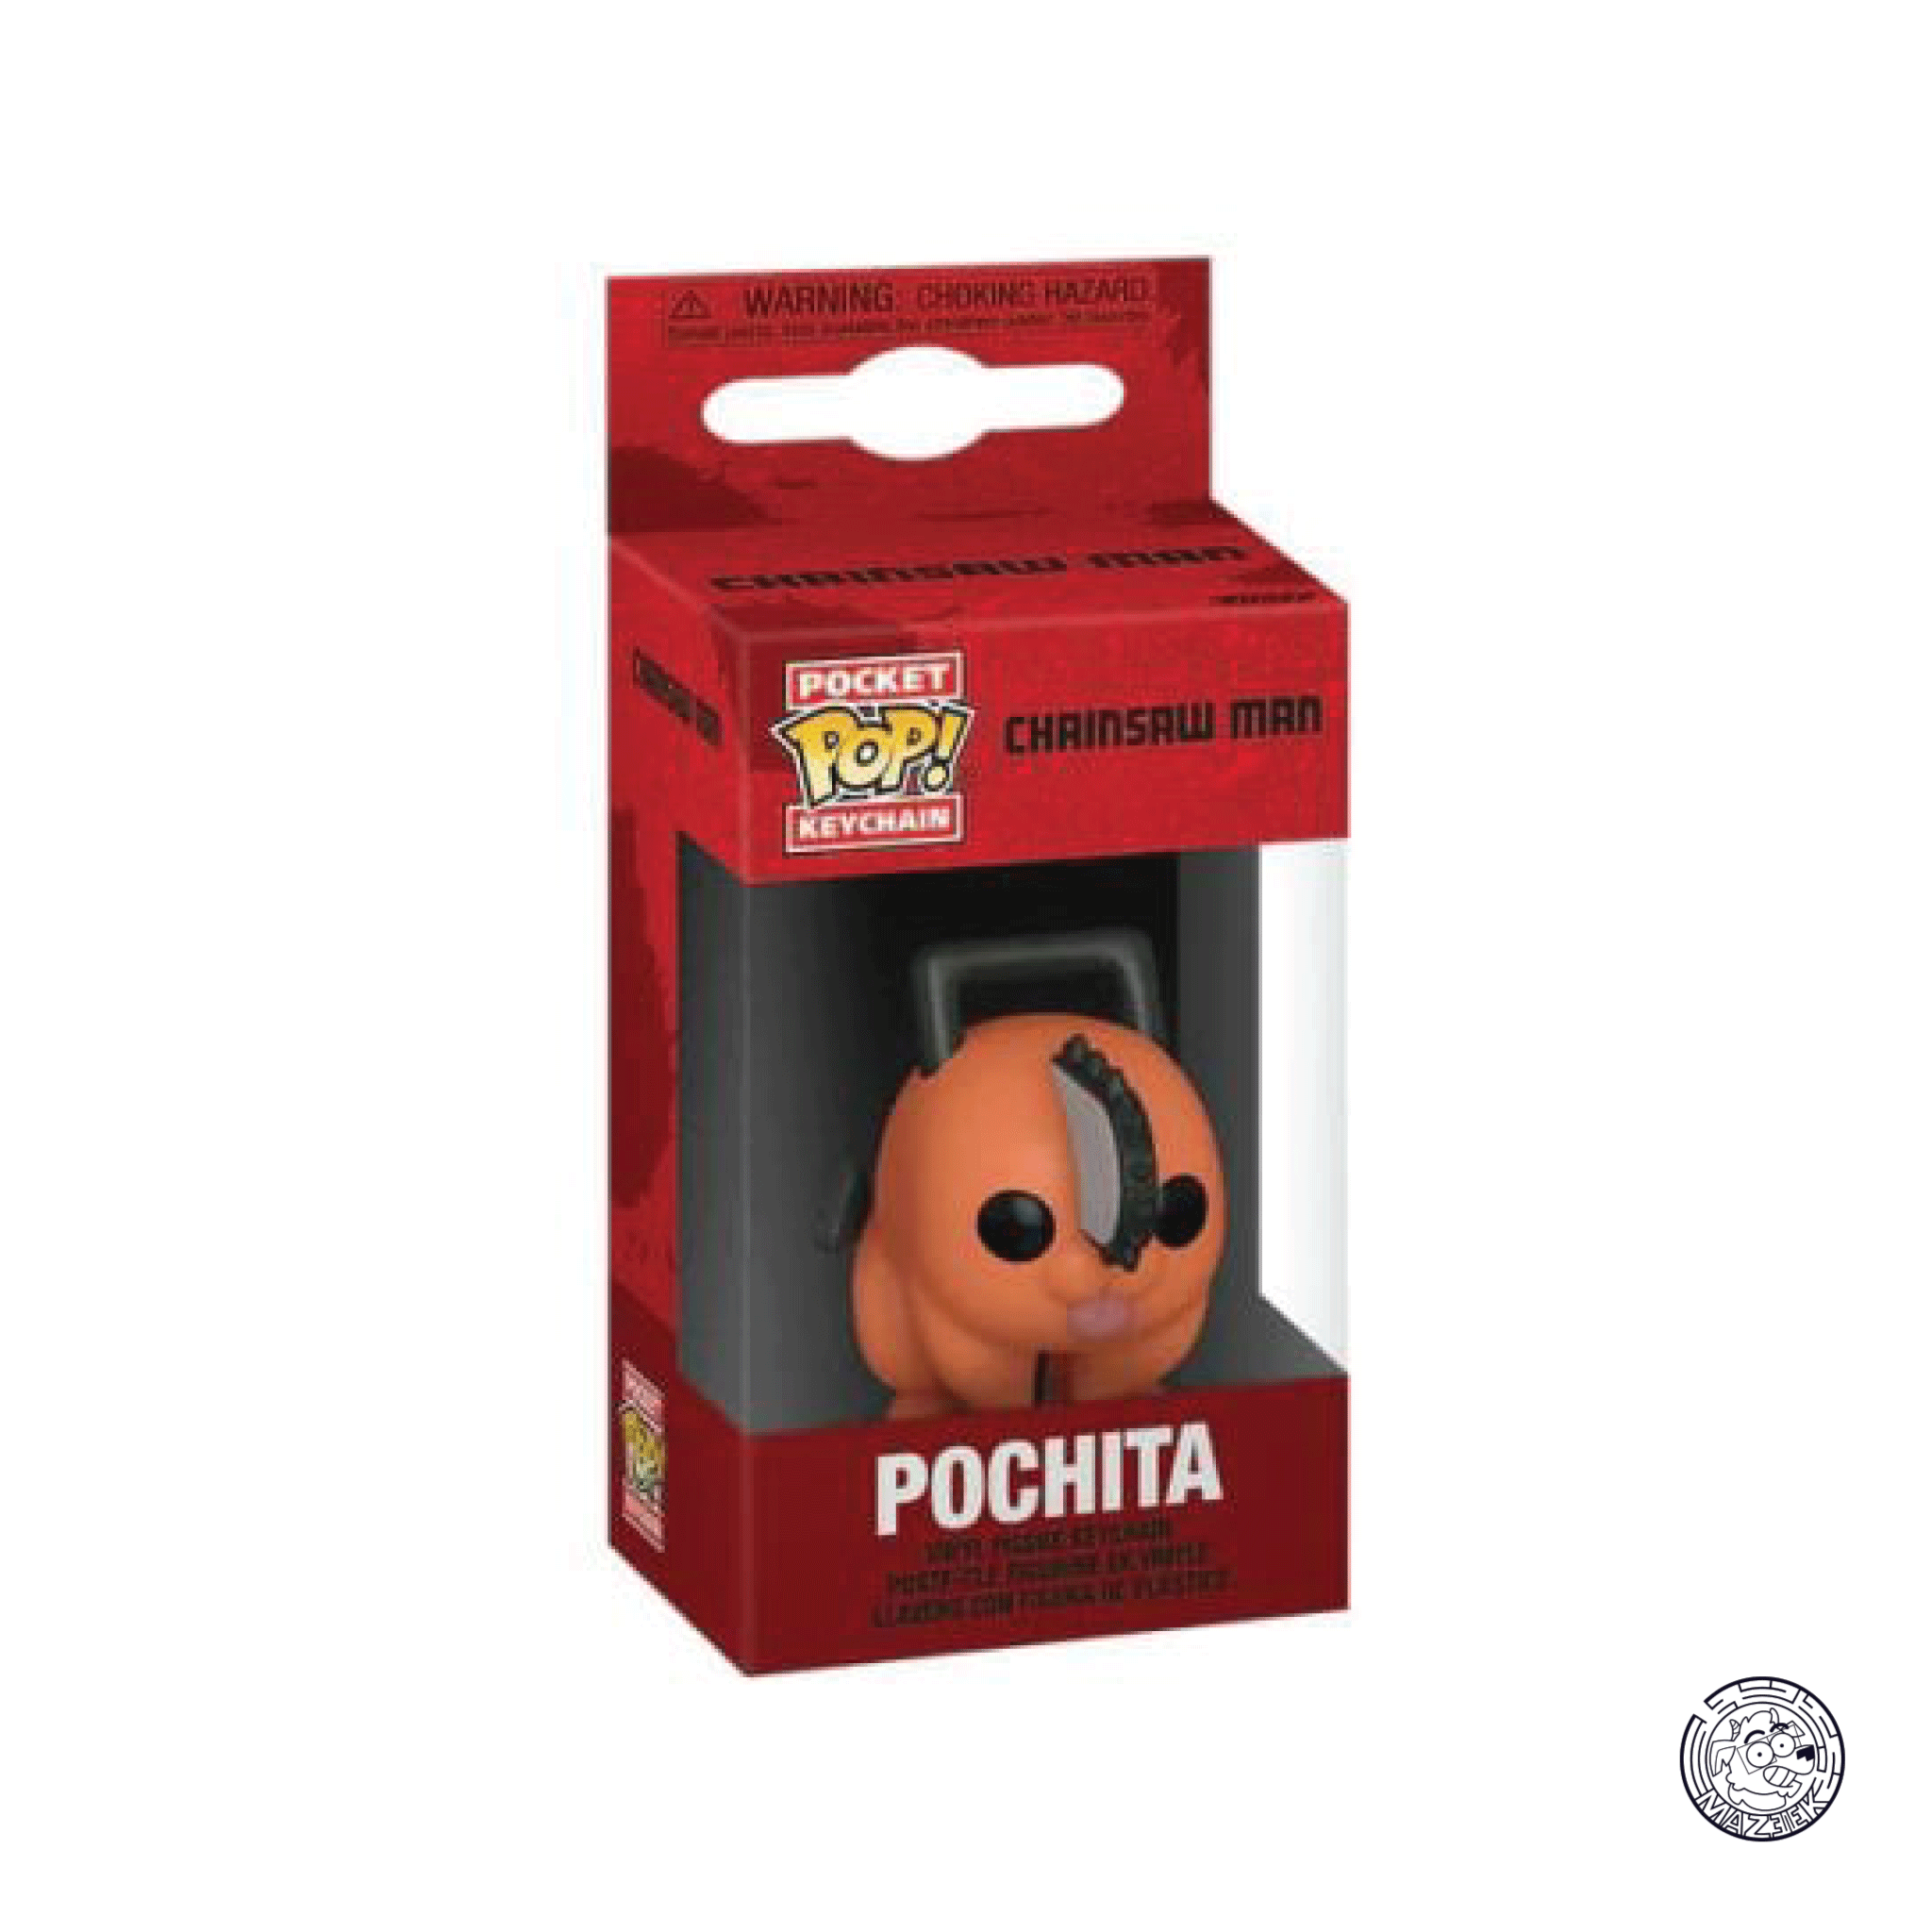 Pocket POP! Keychain Chainsaw Man: Pochita